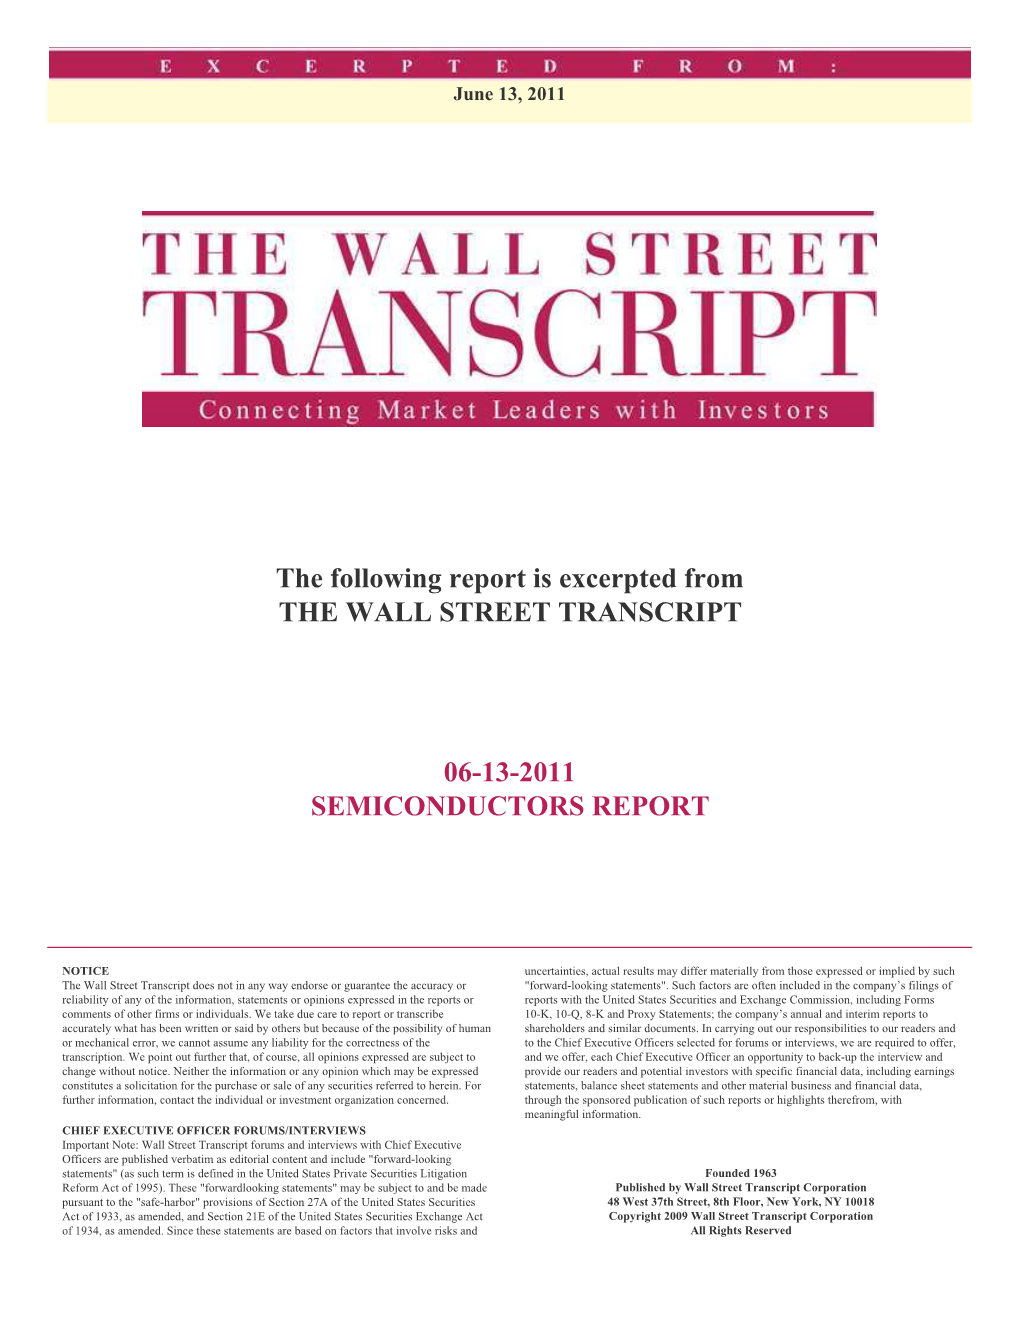 06-13-2011 Semiconductors Report